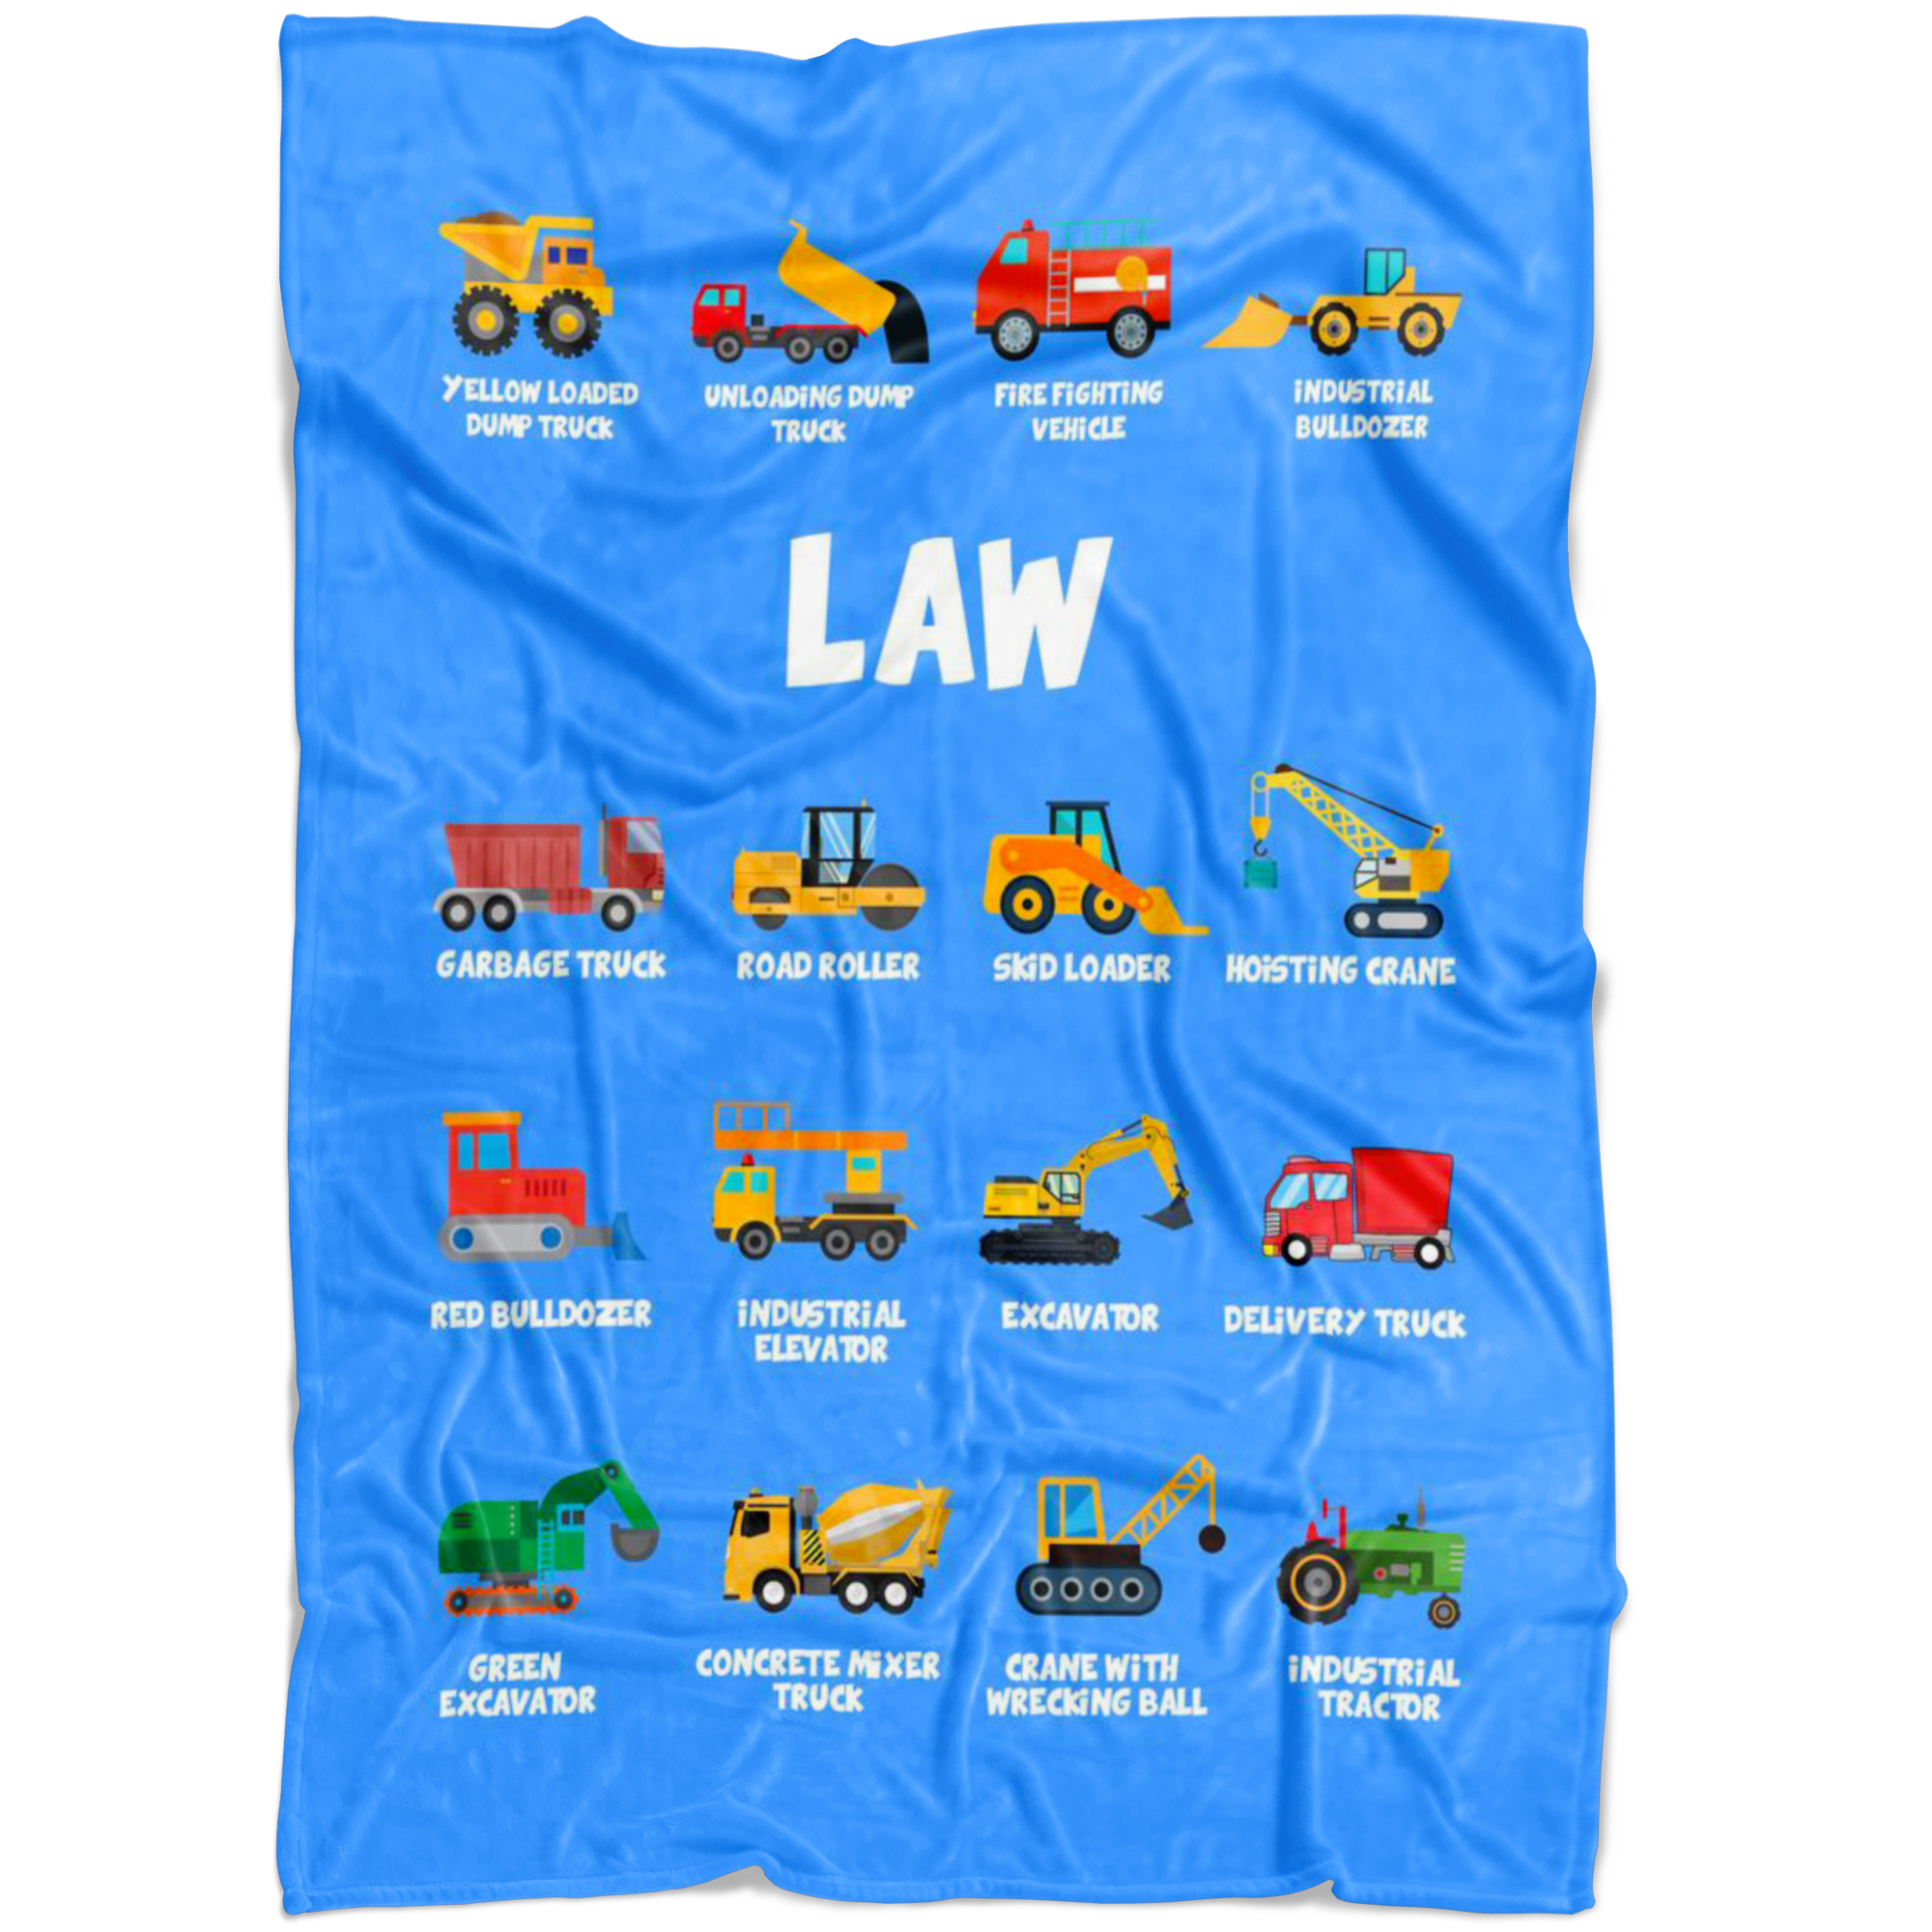 Law Construction Blanket Blue